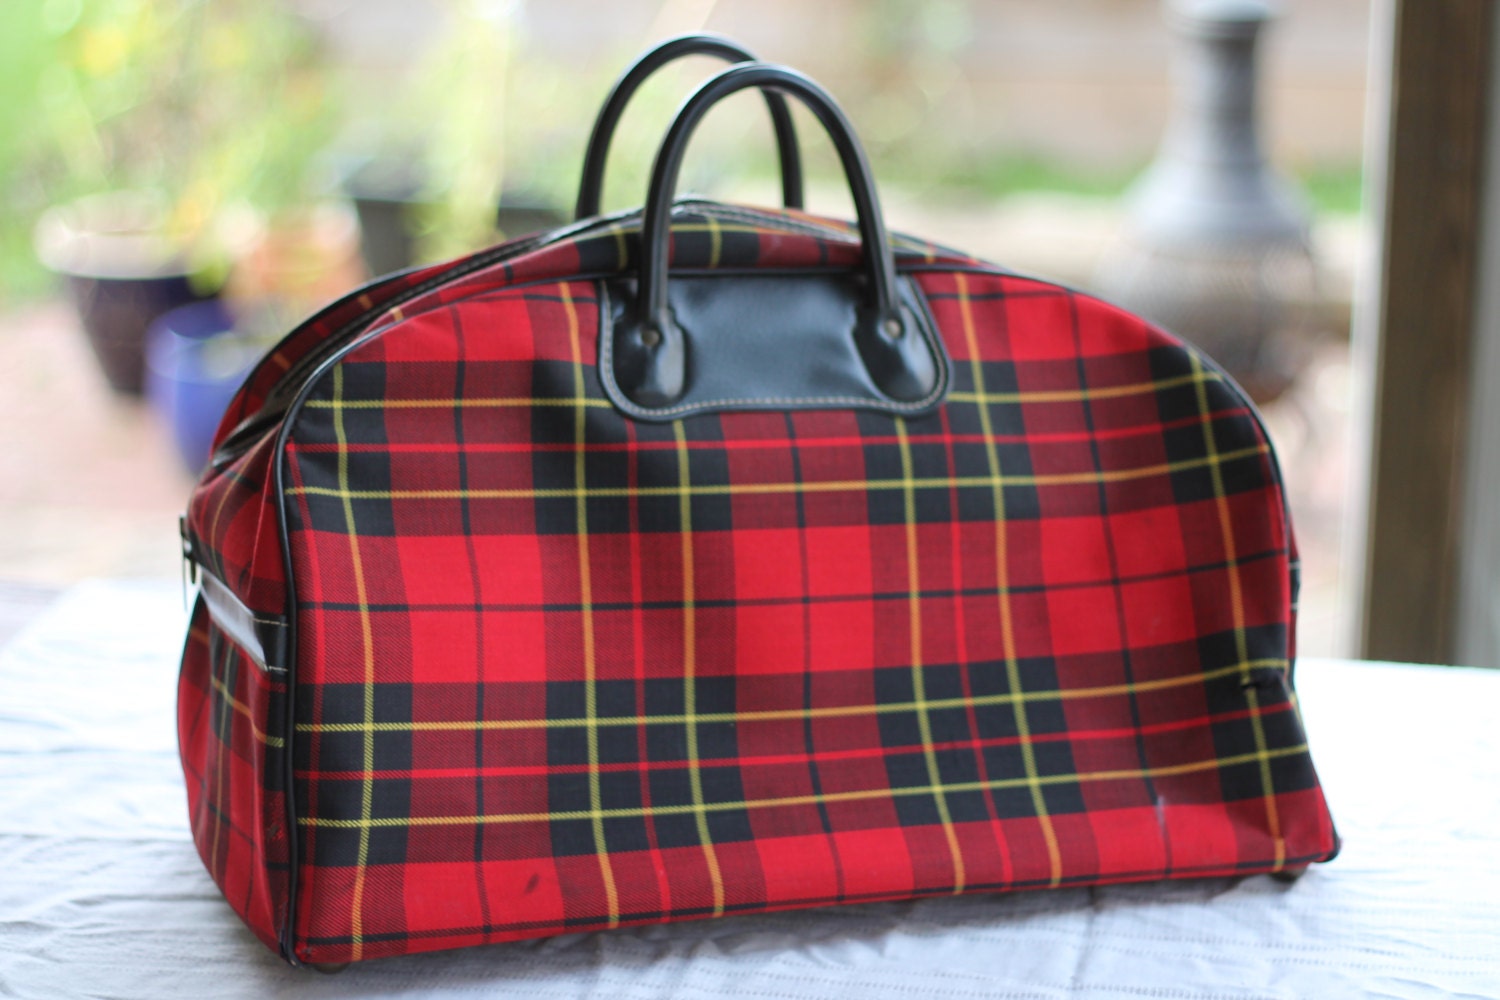 Red Plaid Retro Handbag Enormous Purse Suitcase